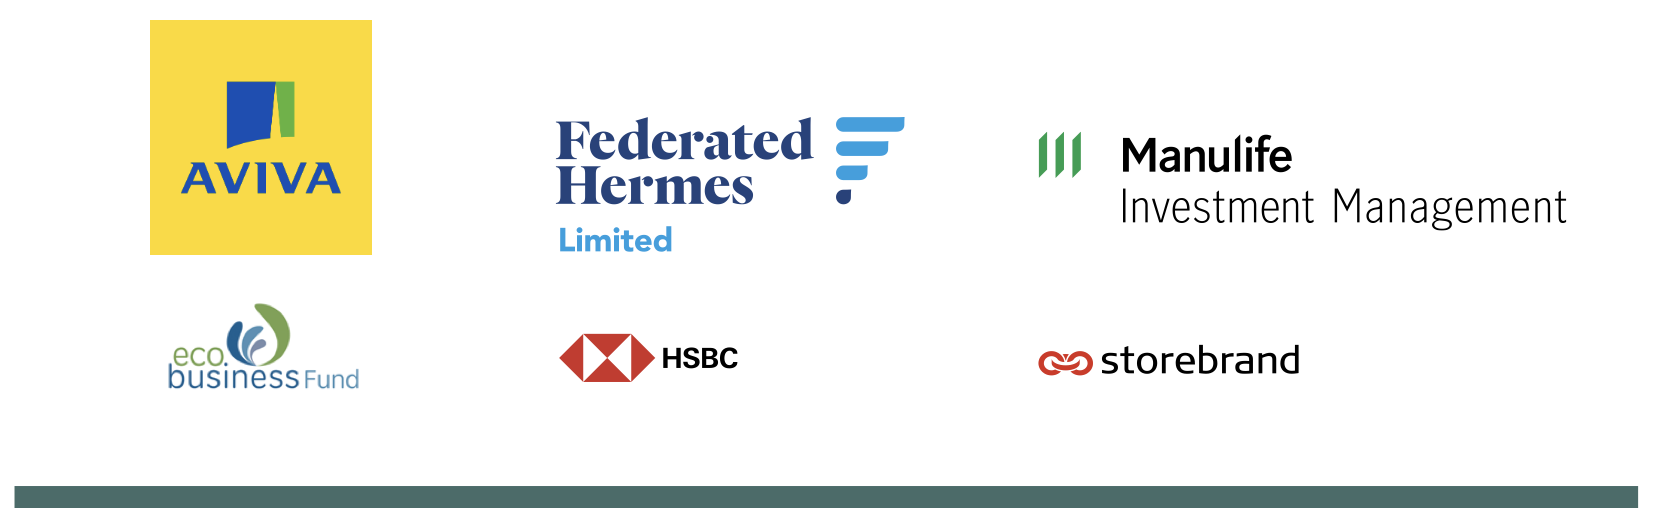 FfBF COP15 Sponsors logos